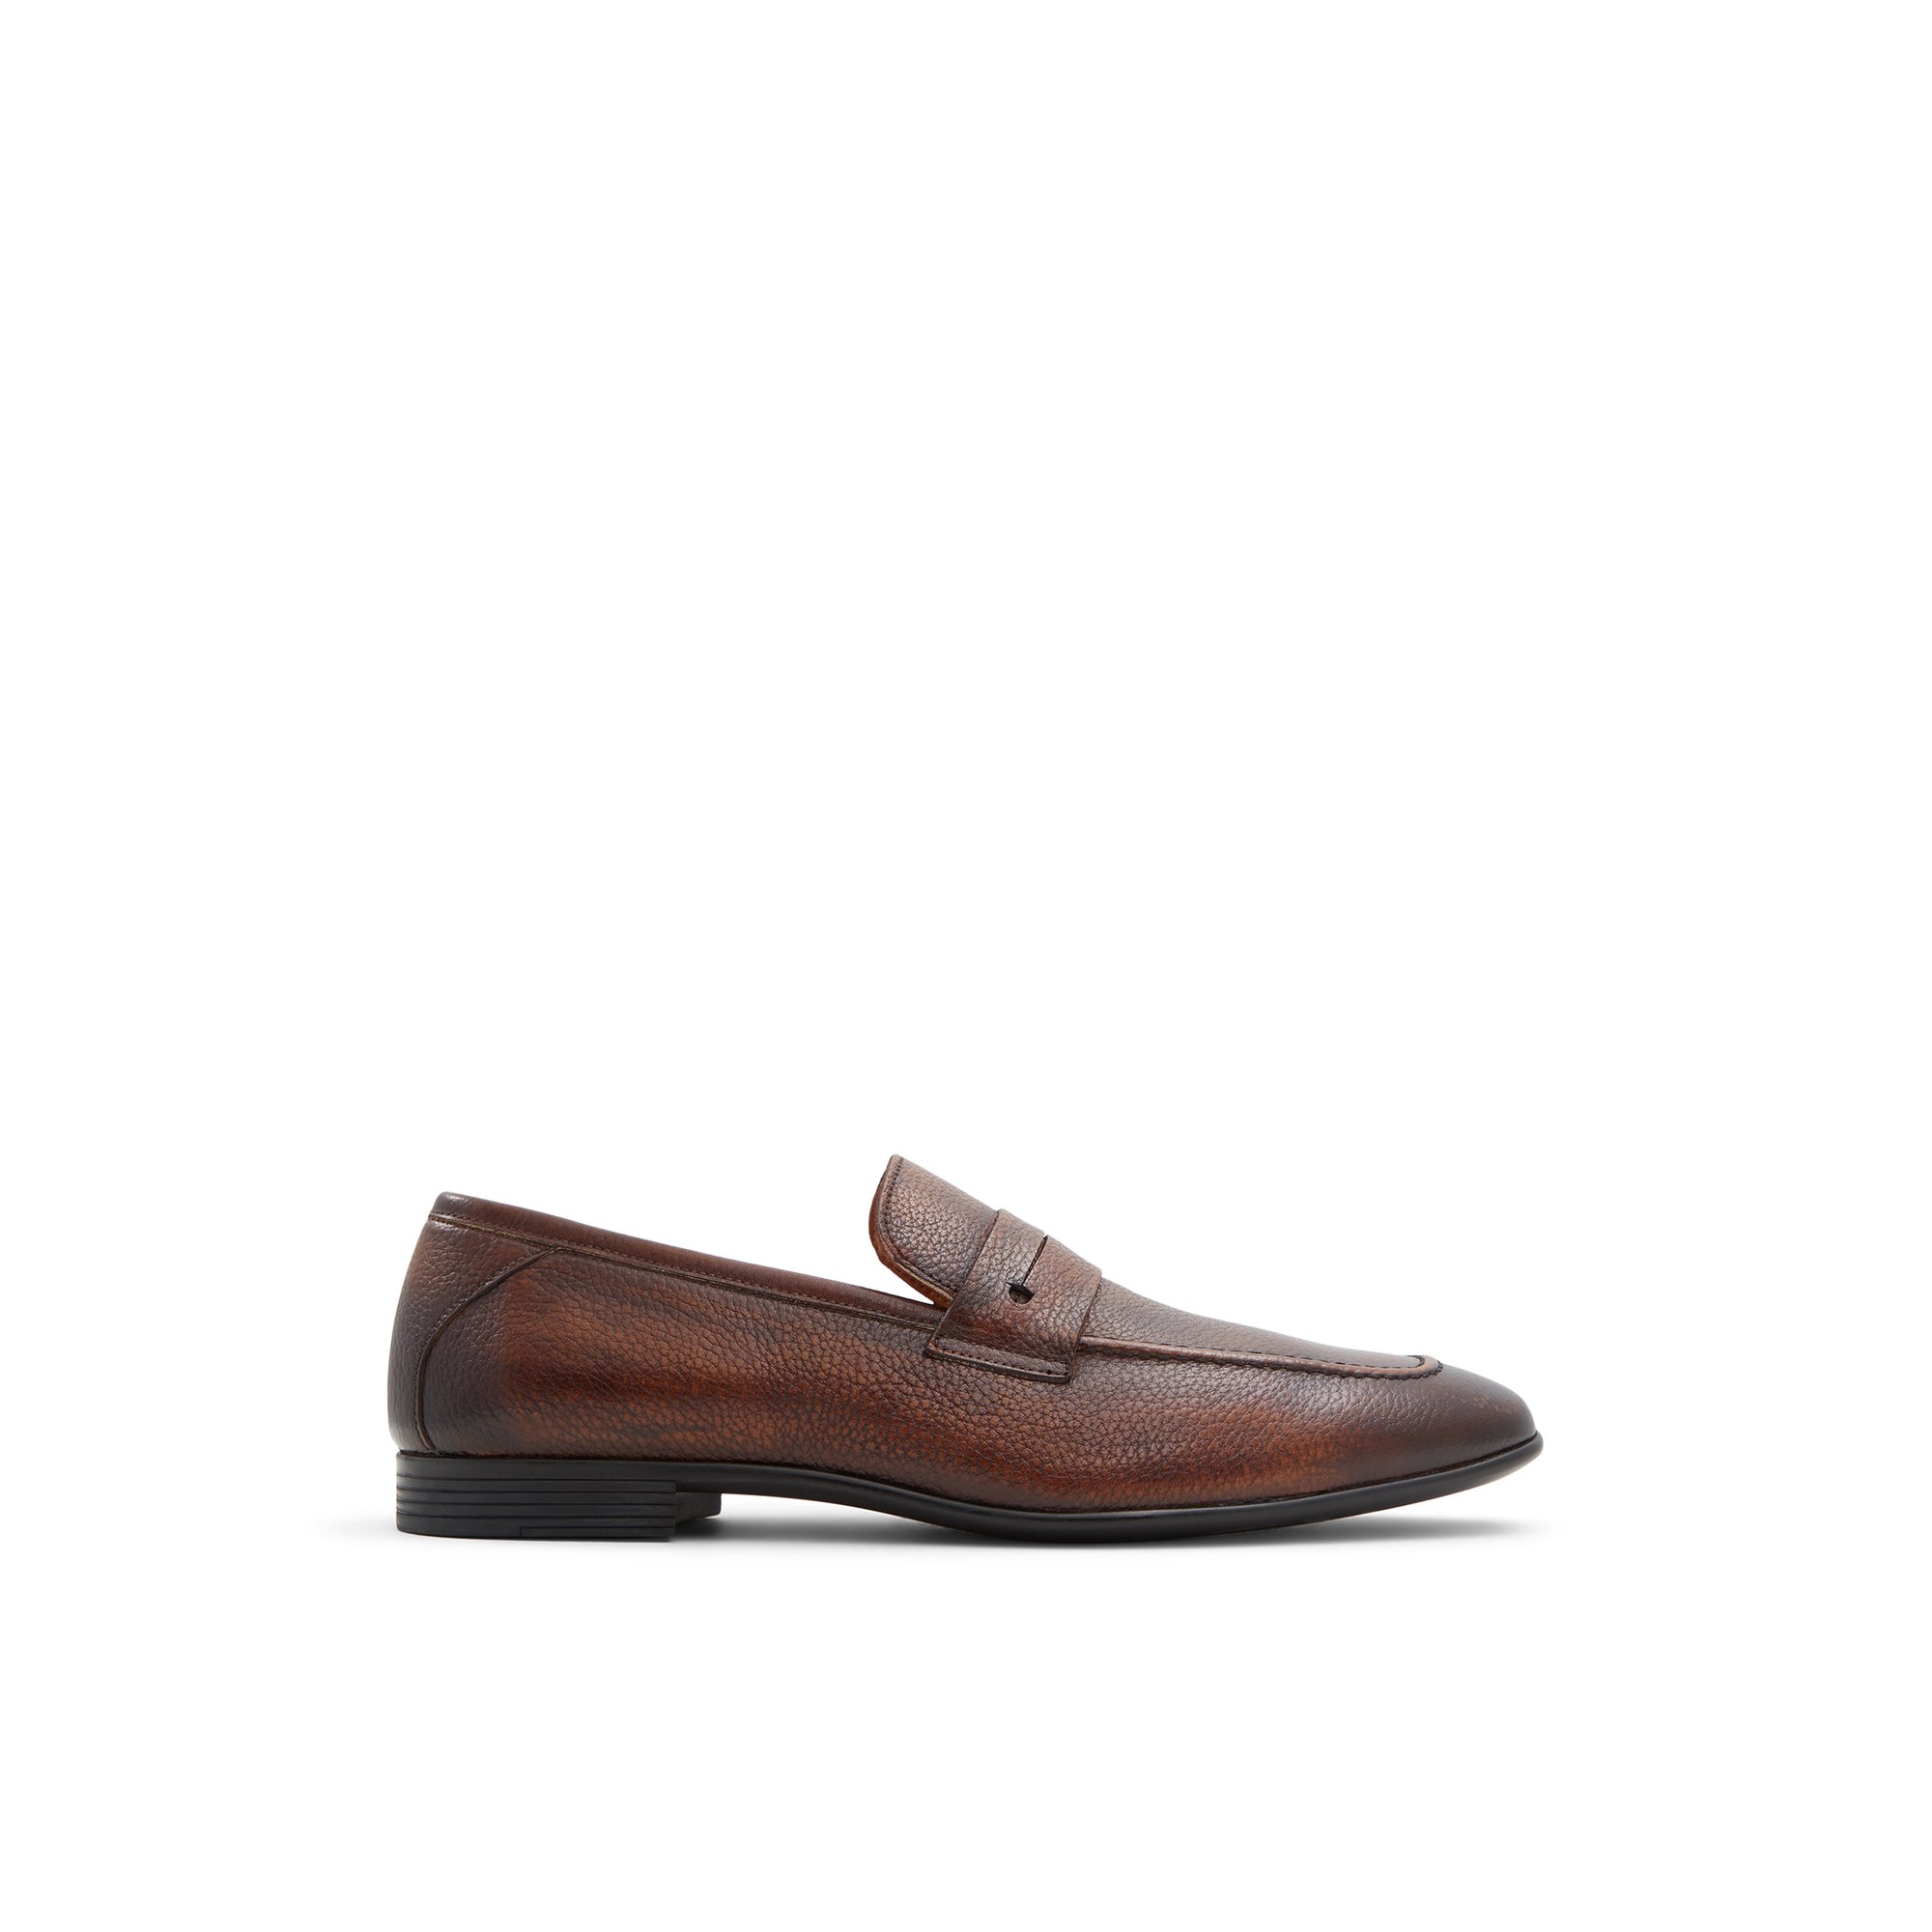 ALDO Watkins - Men's Dress Shoes - Brown